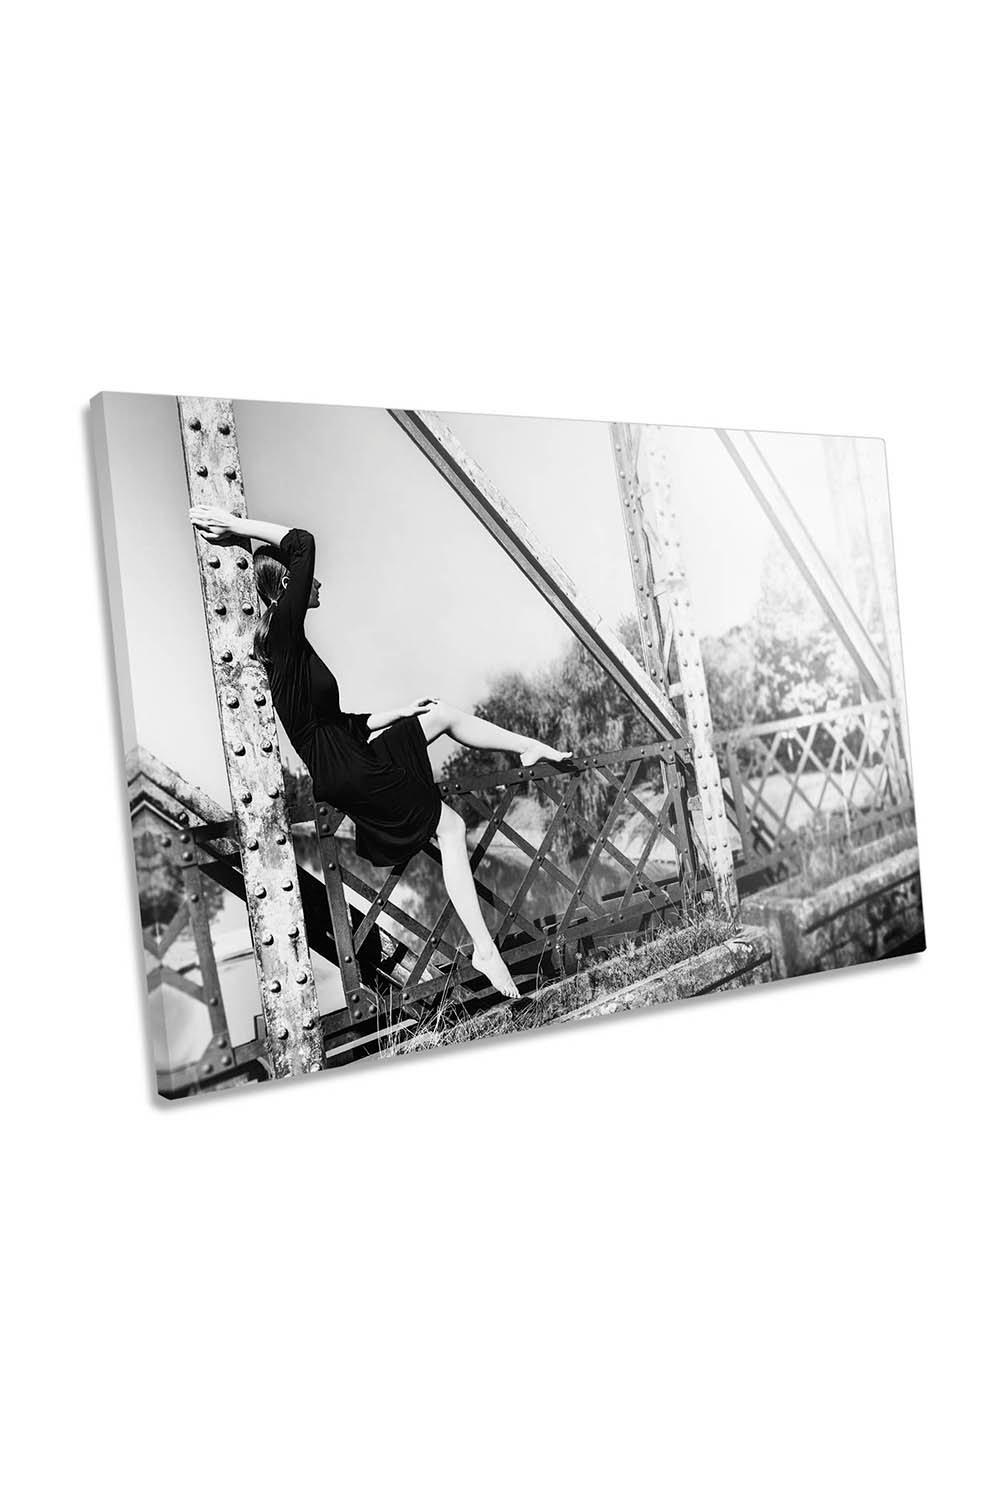 The Past Retro Bridge Woman Memory Canvas Wall Art Picture Print